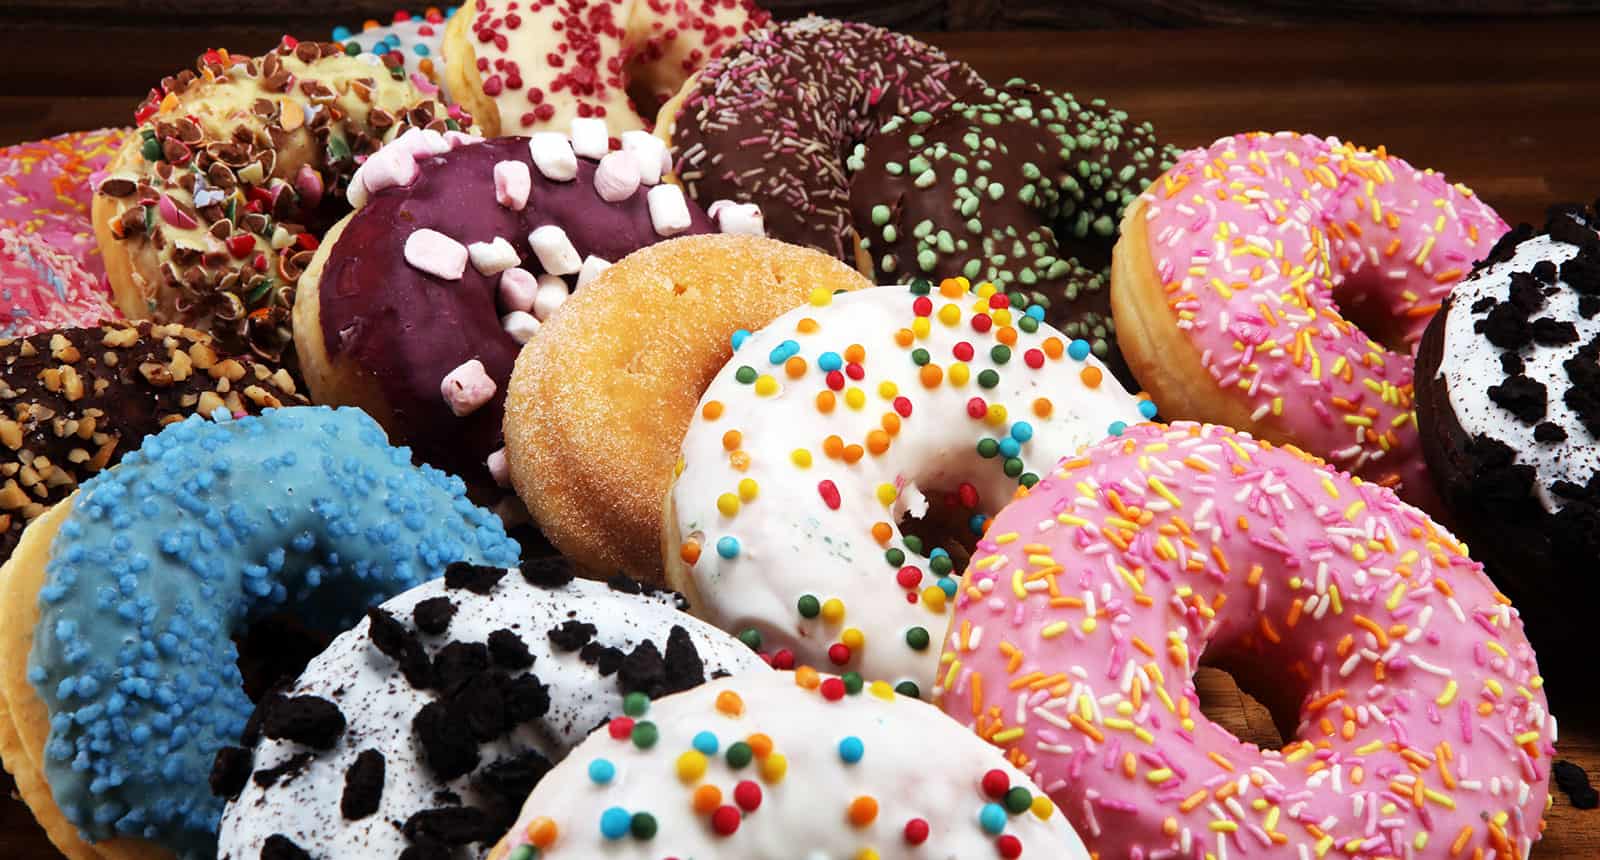 How To Keep Donuts Fresh - Useful Tricks 2022 - Lacademie